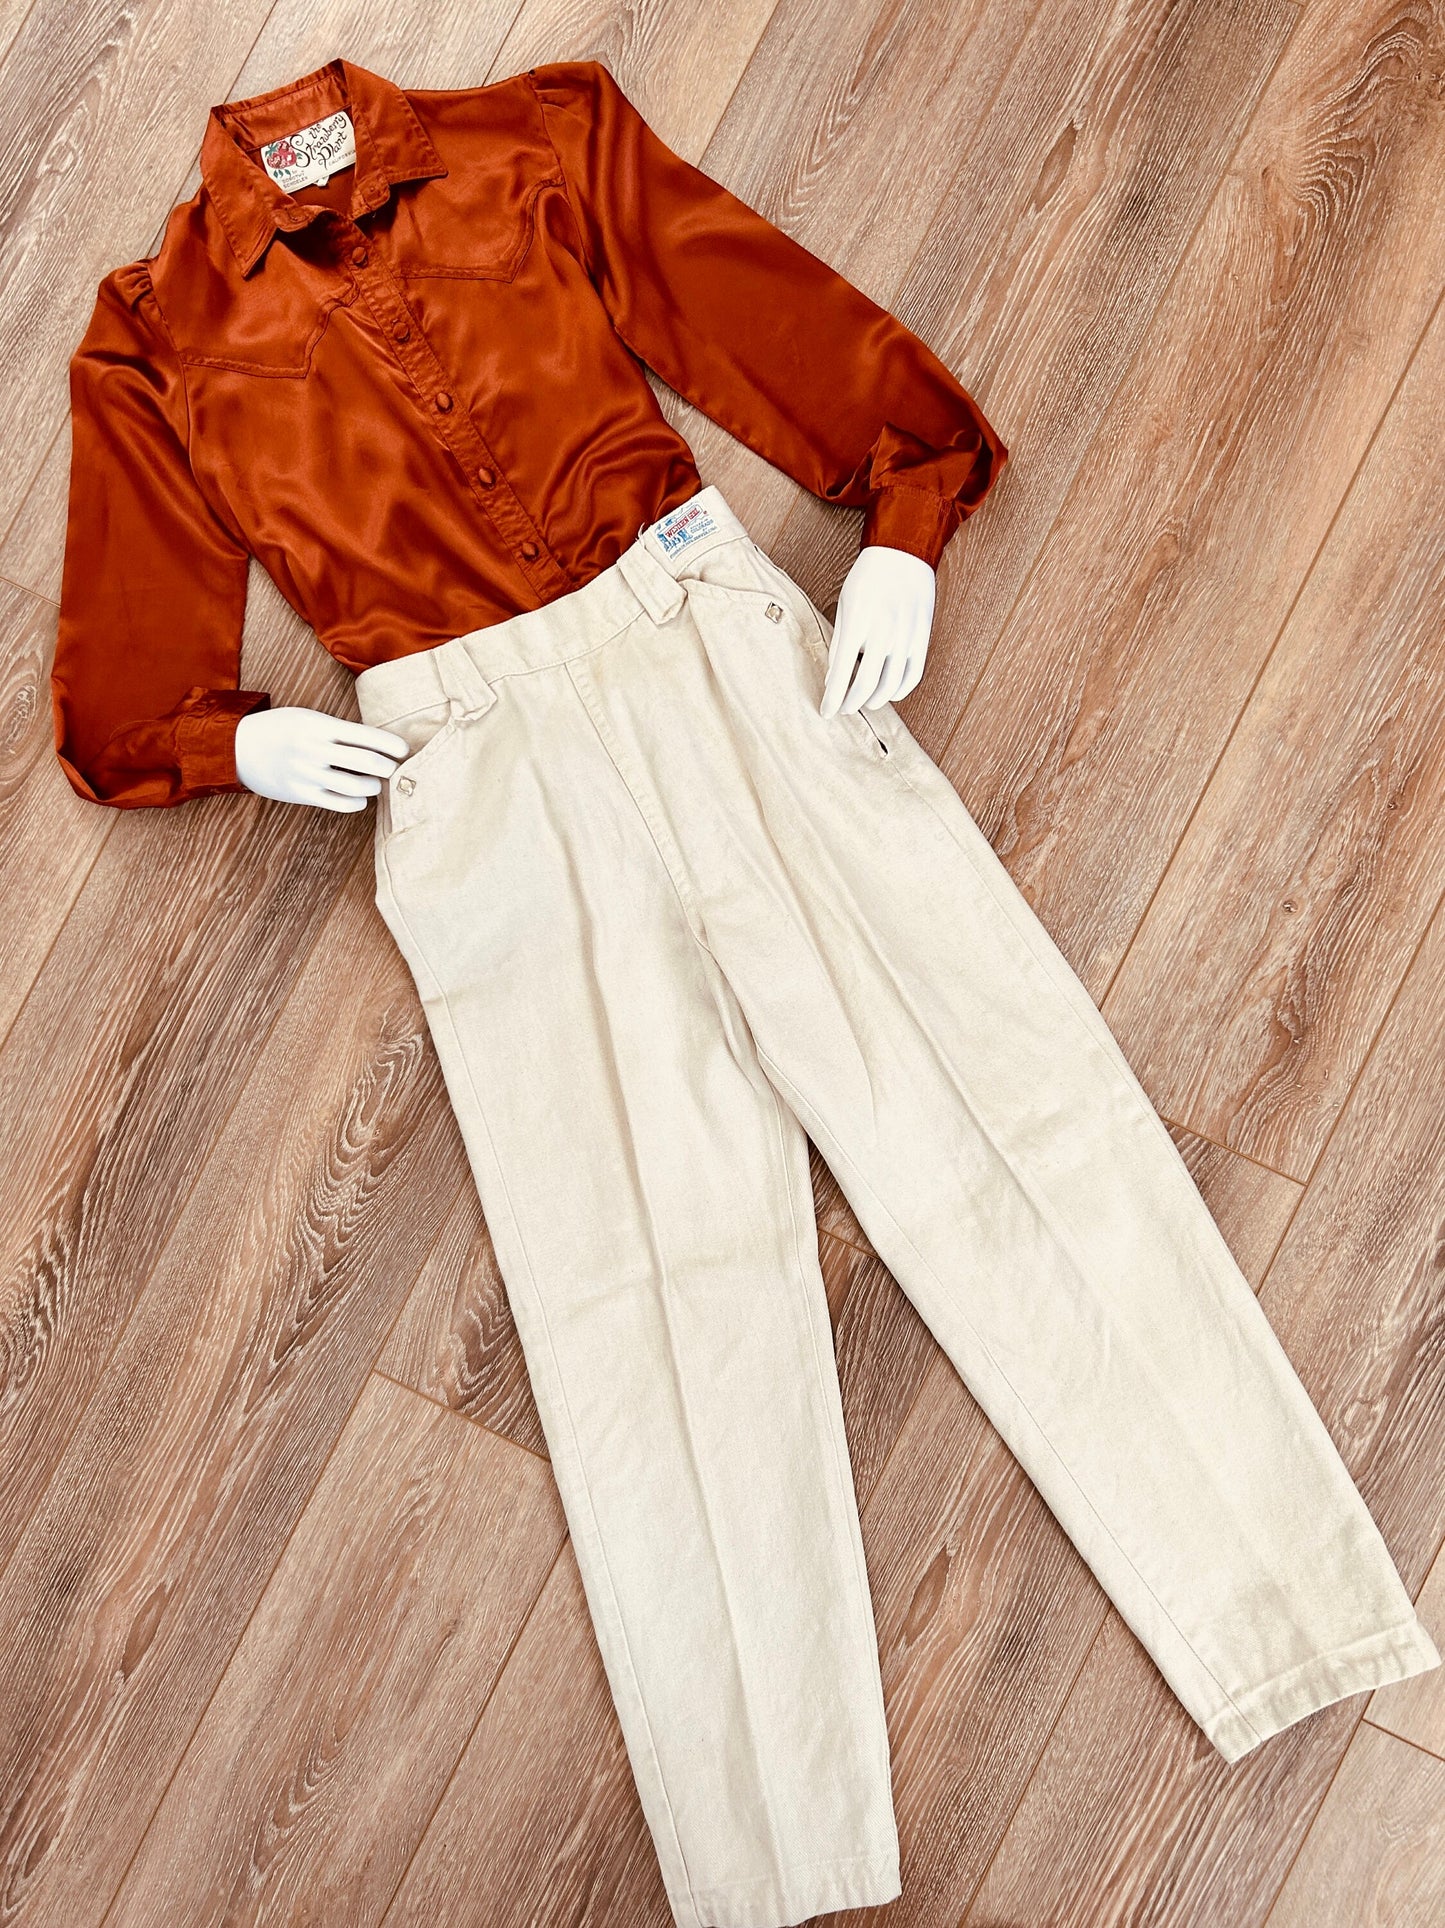 Vintage 1950s Western Denim Jeans / 50s Retro Side Zip Jeans / Size XS S